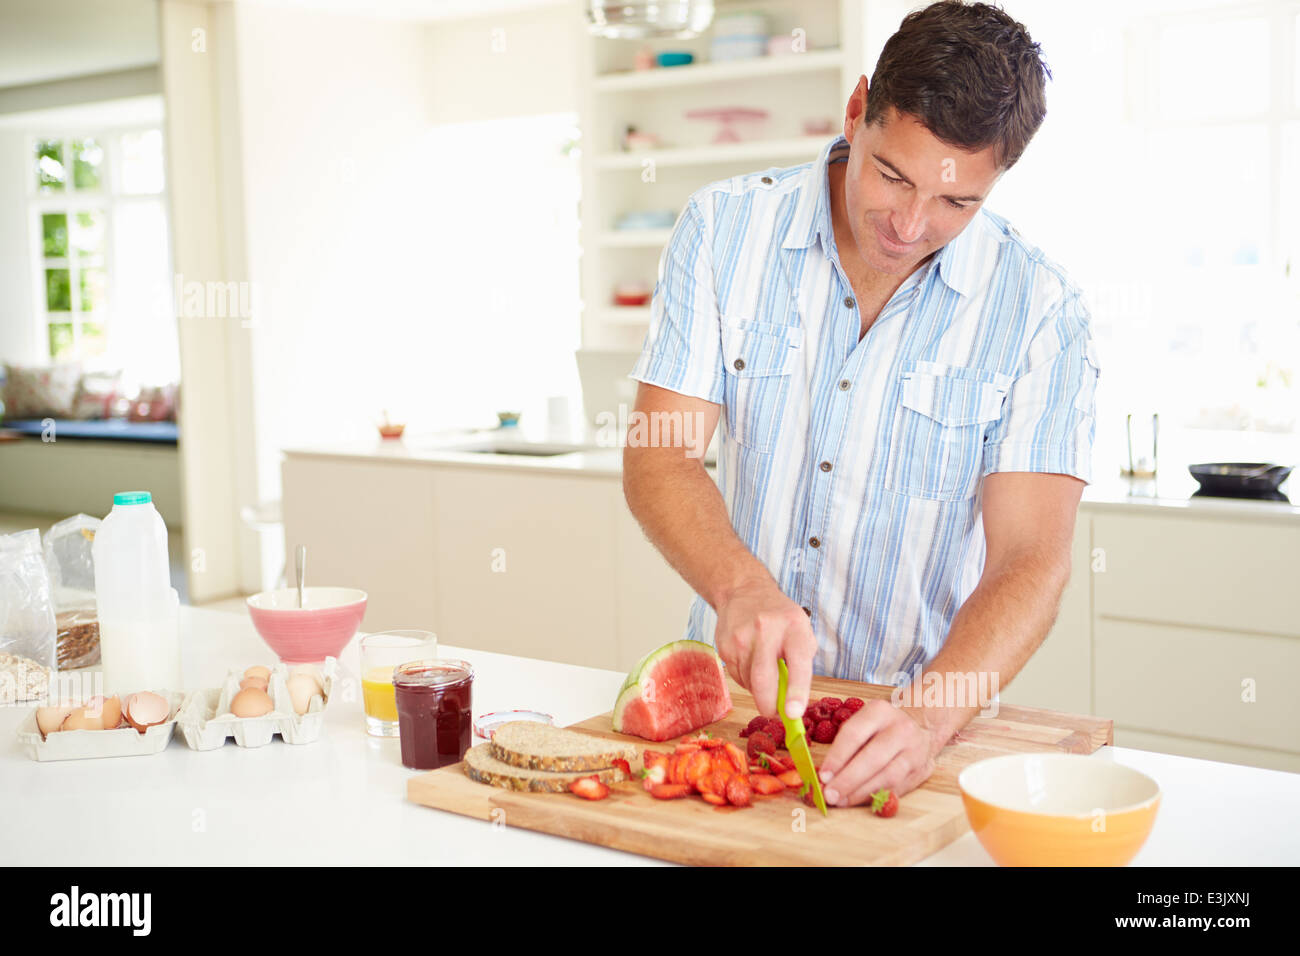 Man Preparing Healthy Breakfast In Kitchen Stock Photo